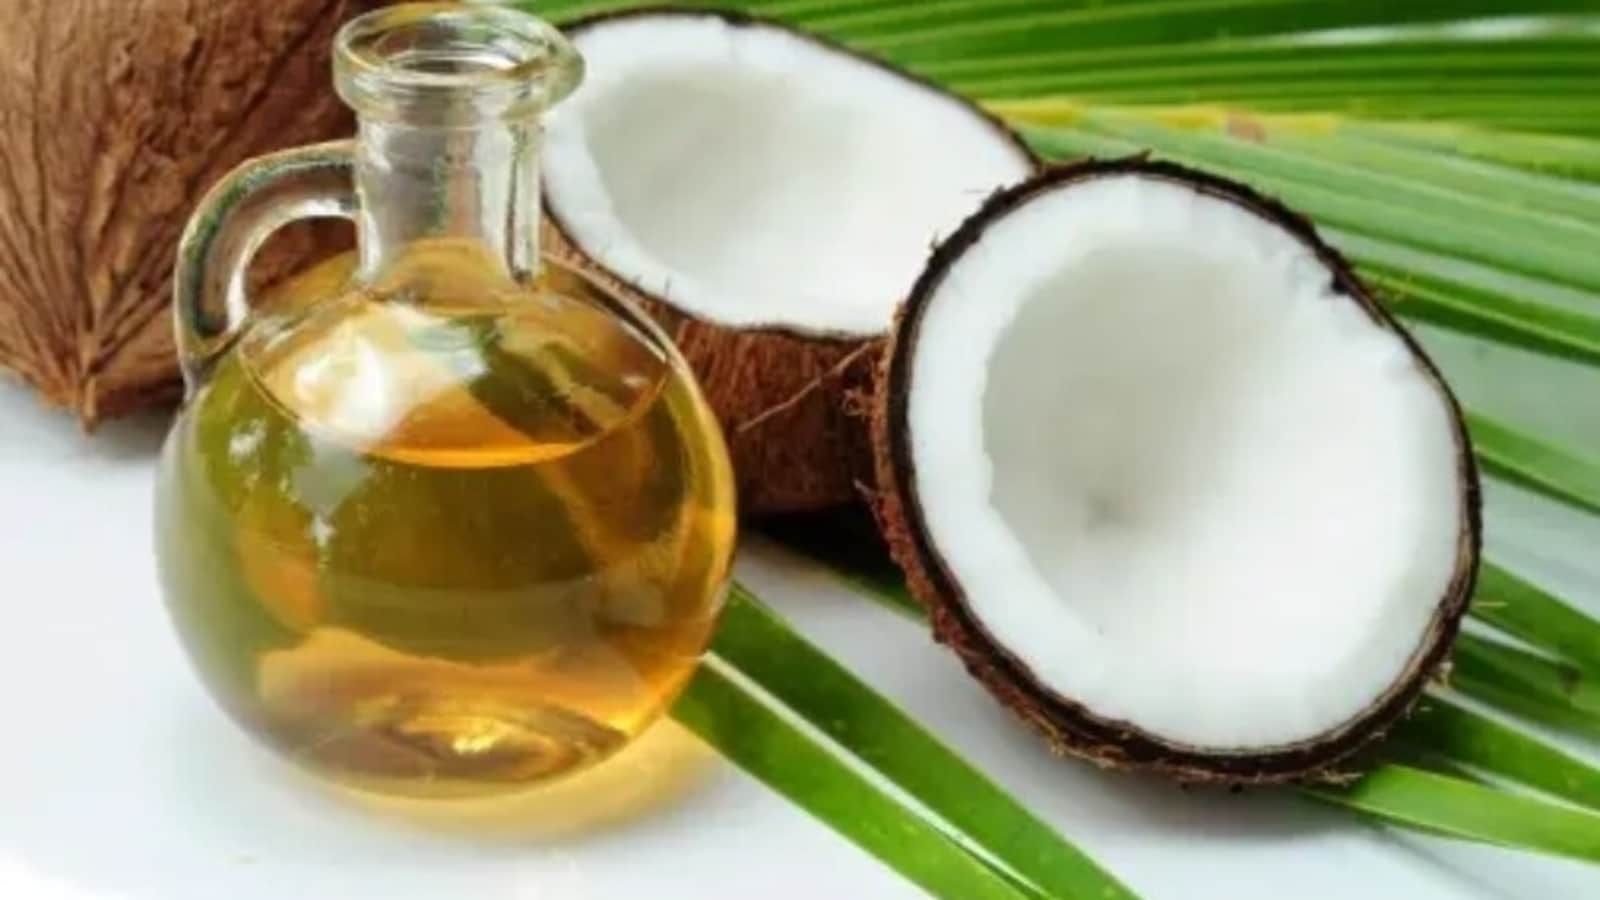 Coconut oil sale skyrocket on Holi eve, Blinkit CEO Albinder Dhindsa